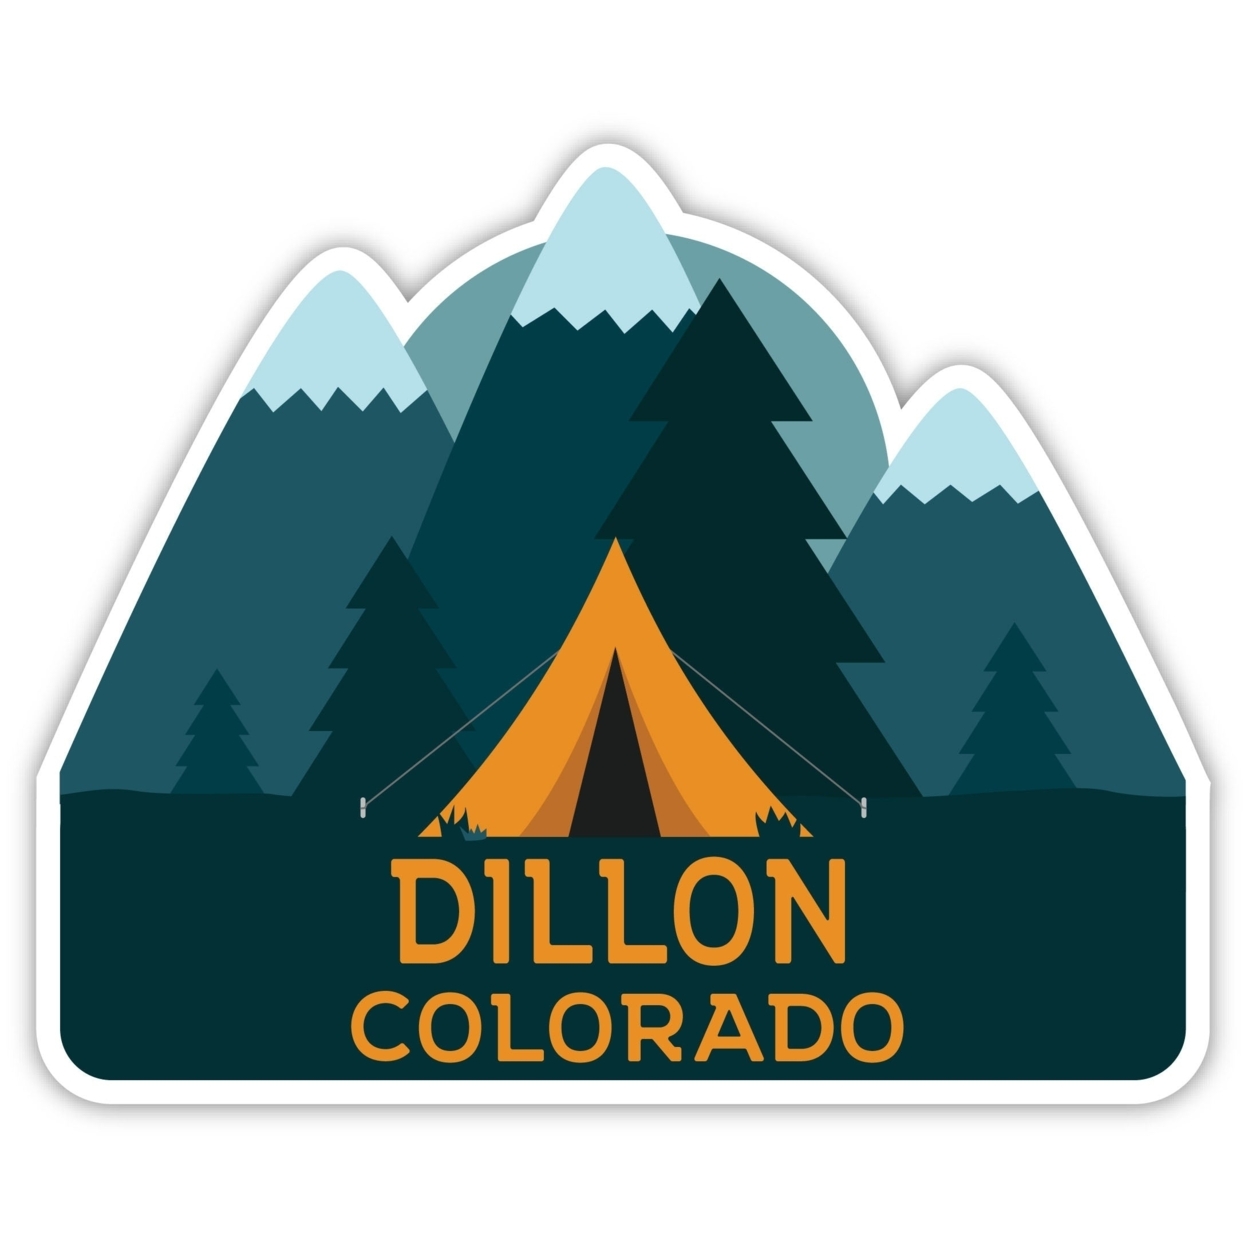 Dillon Colorado Souvenir Decorative Stickers (Choose Theme And Size) - 4-Pack, 6-Inch, Adventures Awaits